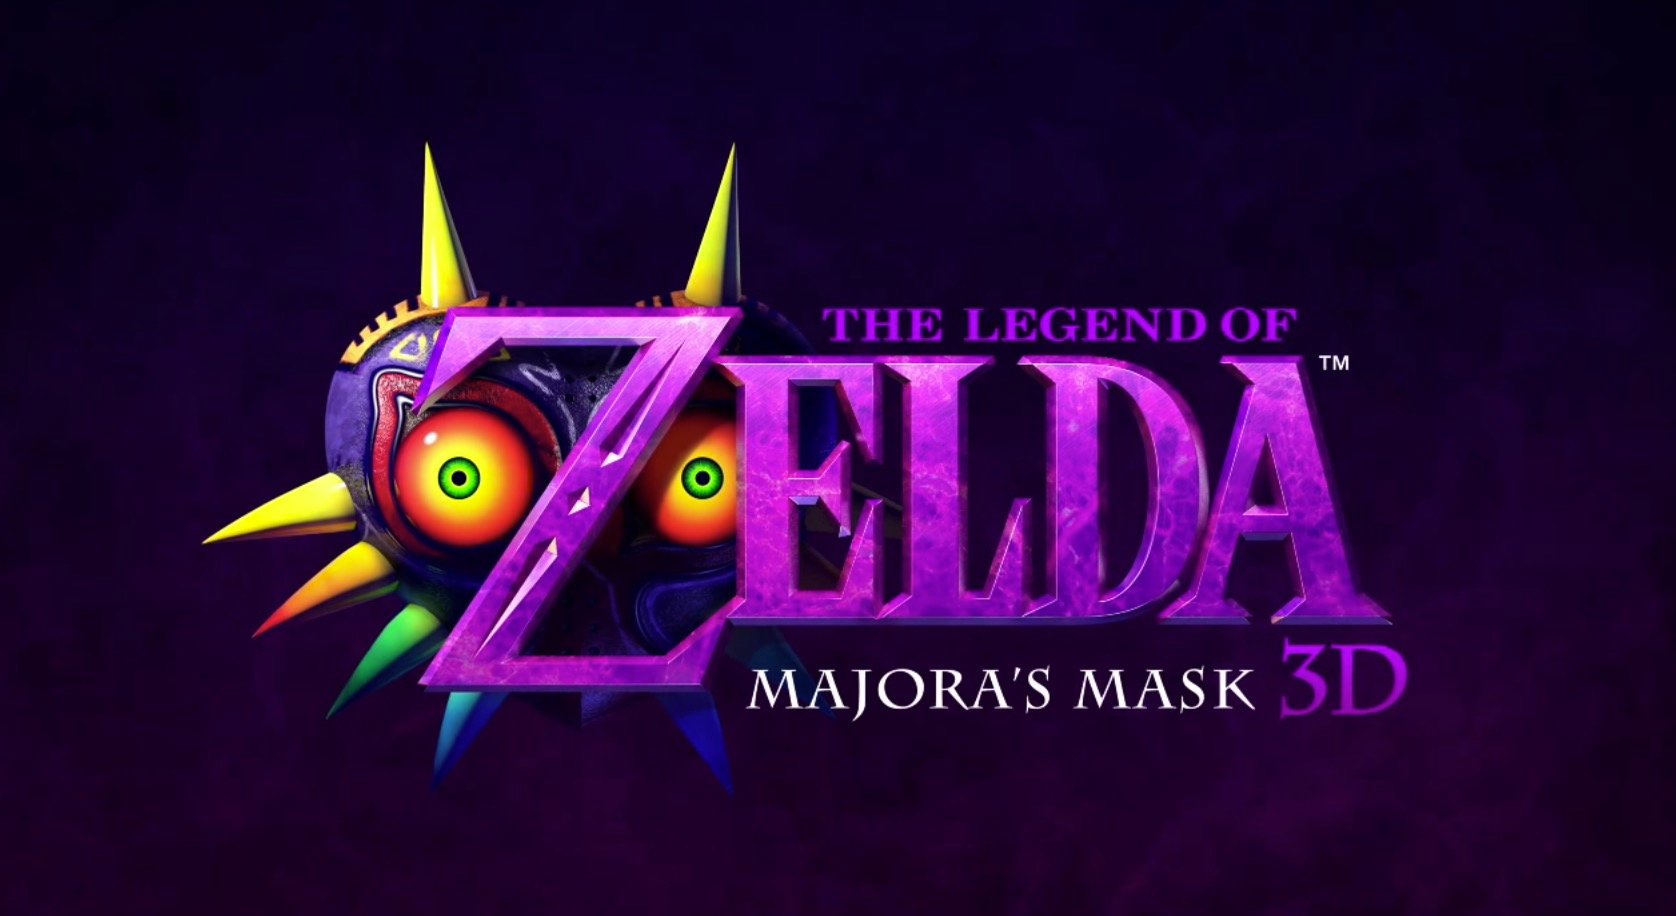 Watch a new The Legend of Zelda: Majora’s Mask 3D release announcement.